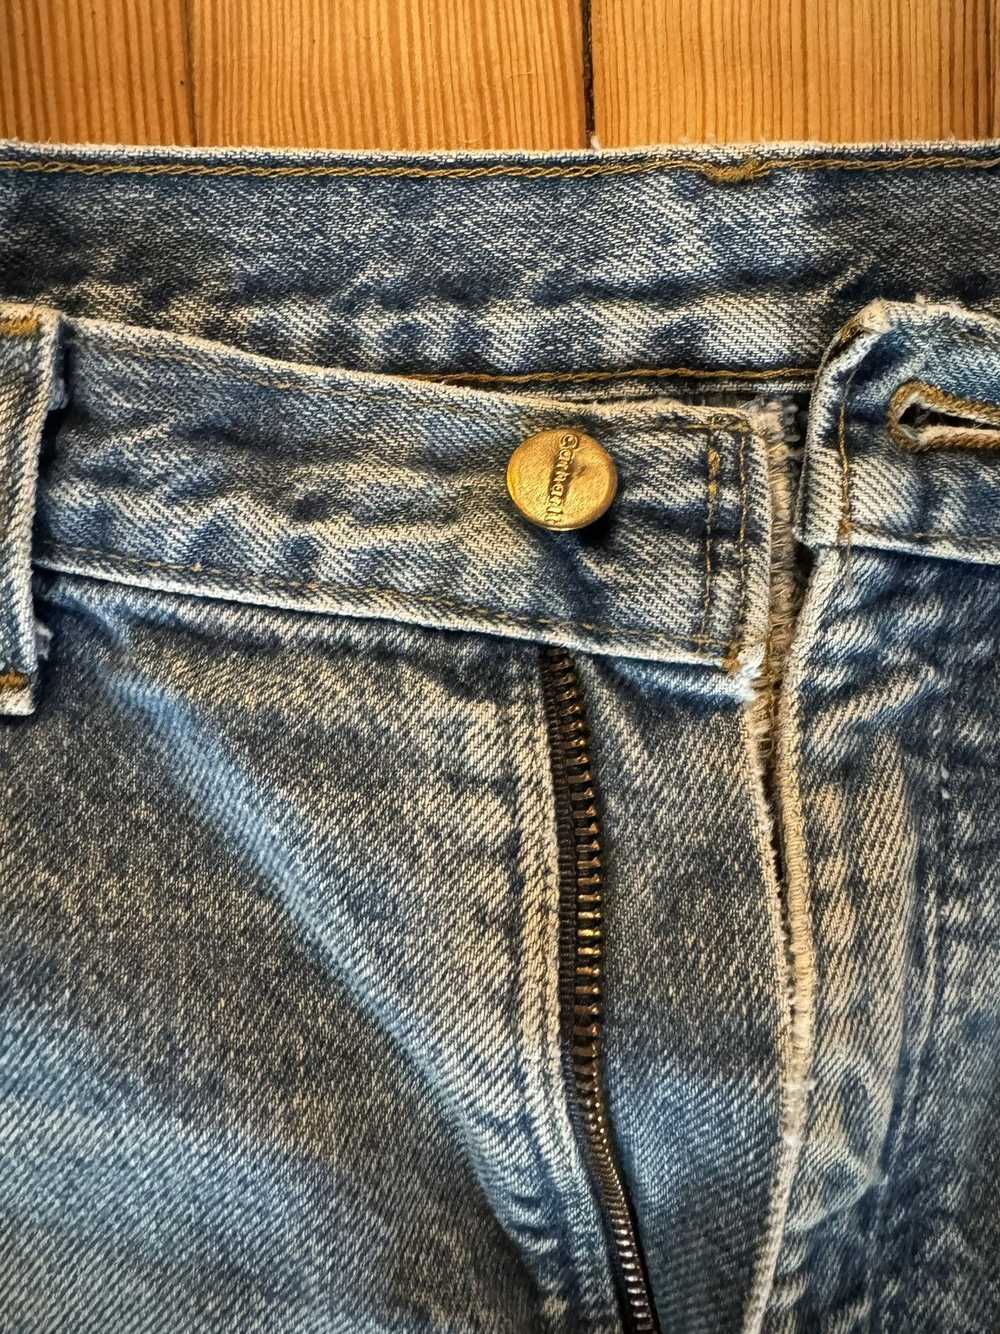 Carhartt Vintage Carhartt Jeans - image 5